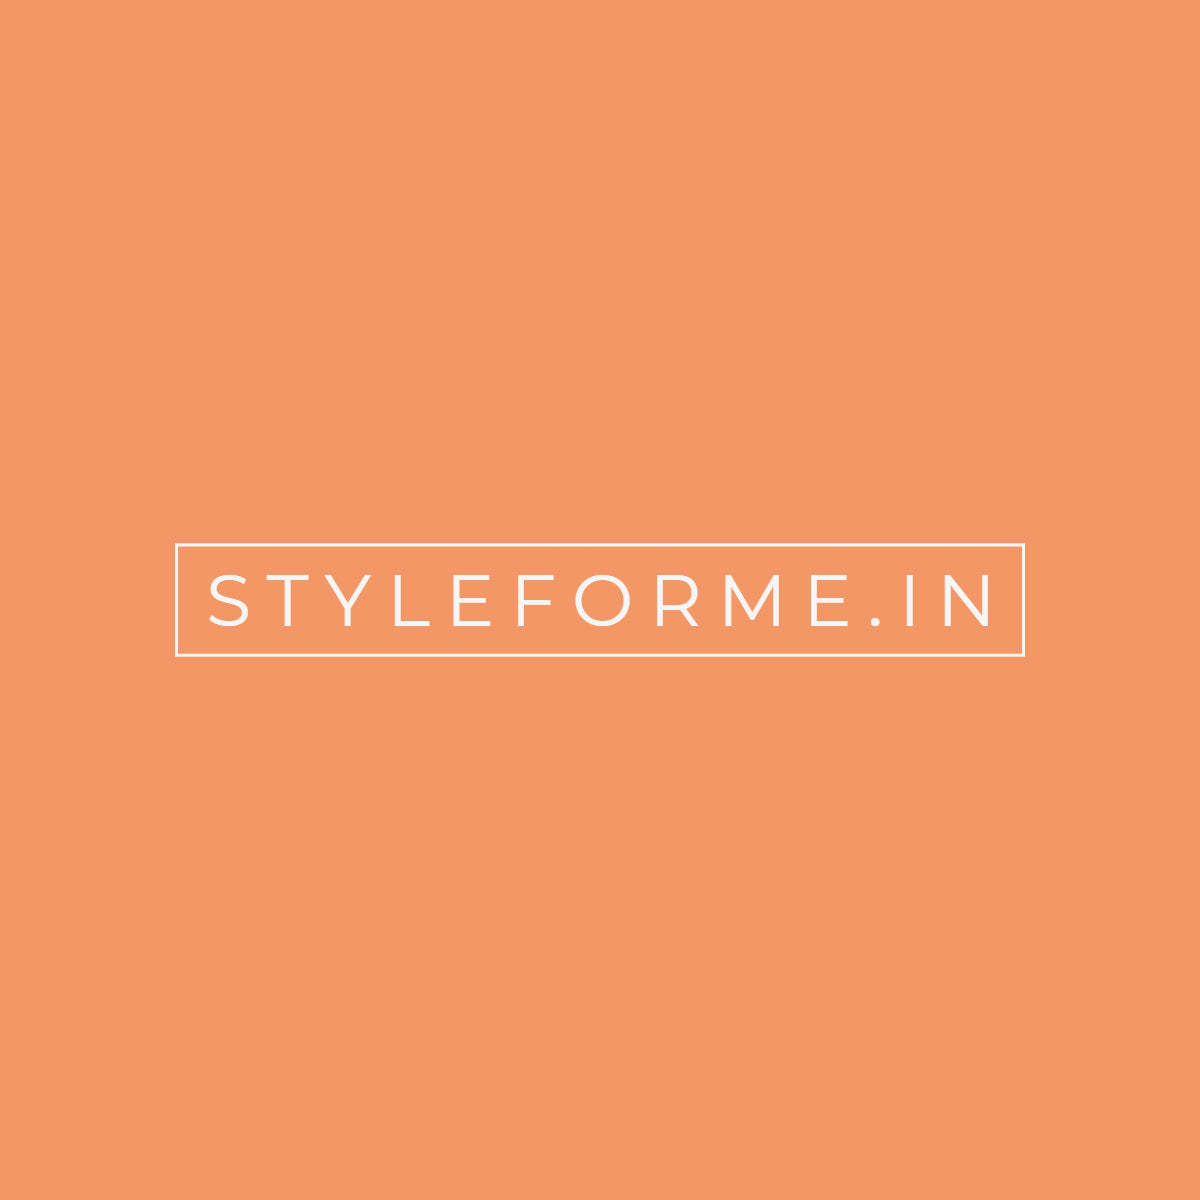 StyleForMe.in– styleforme.in